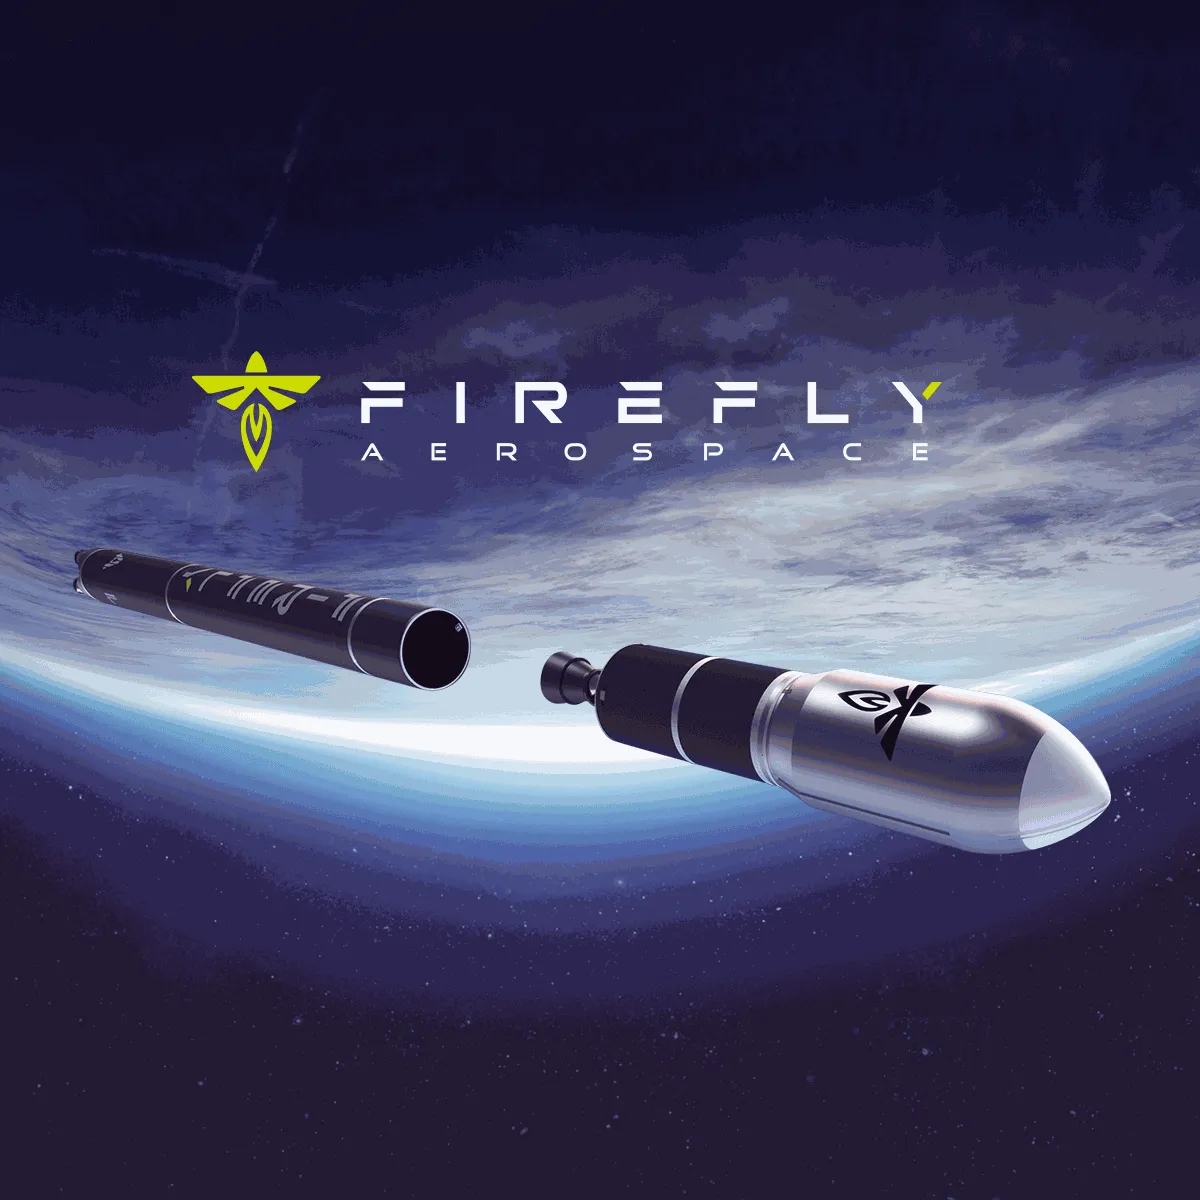 Firefly Aerospace